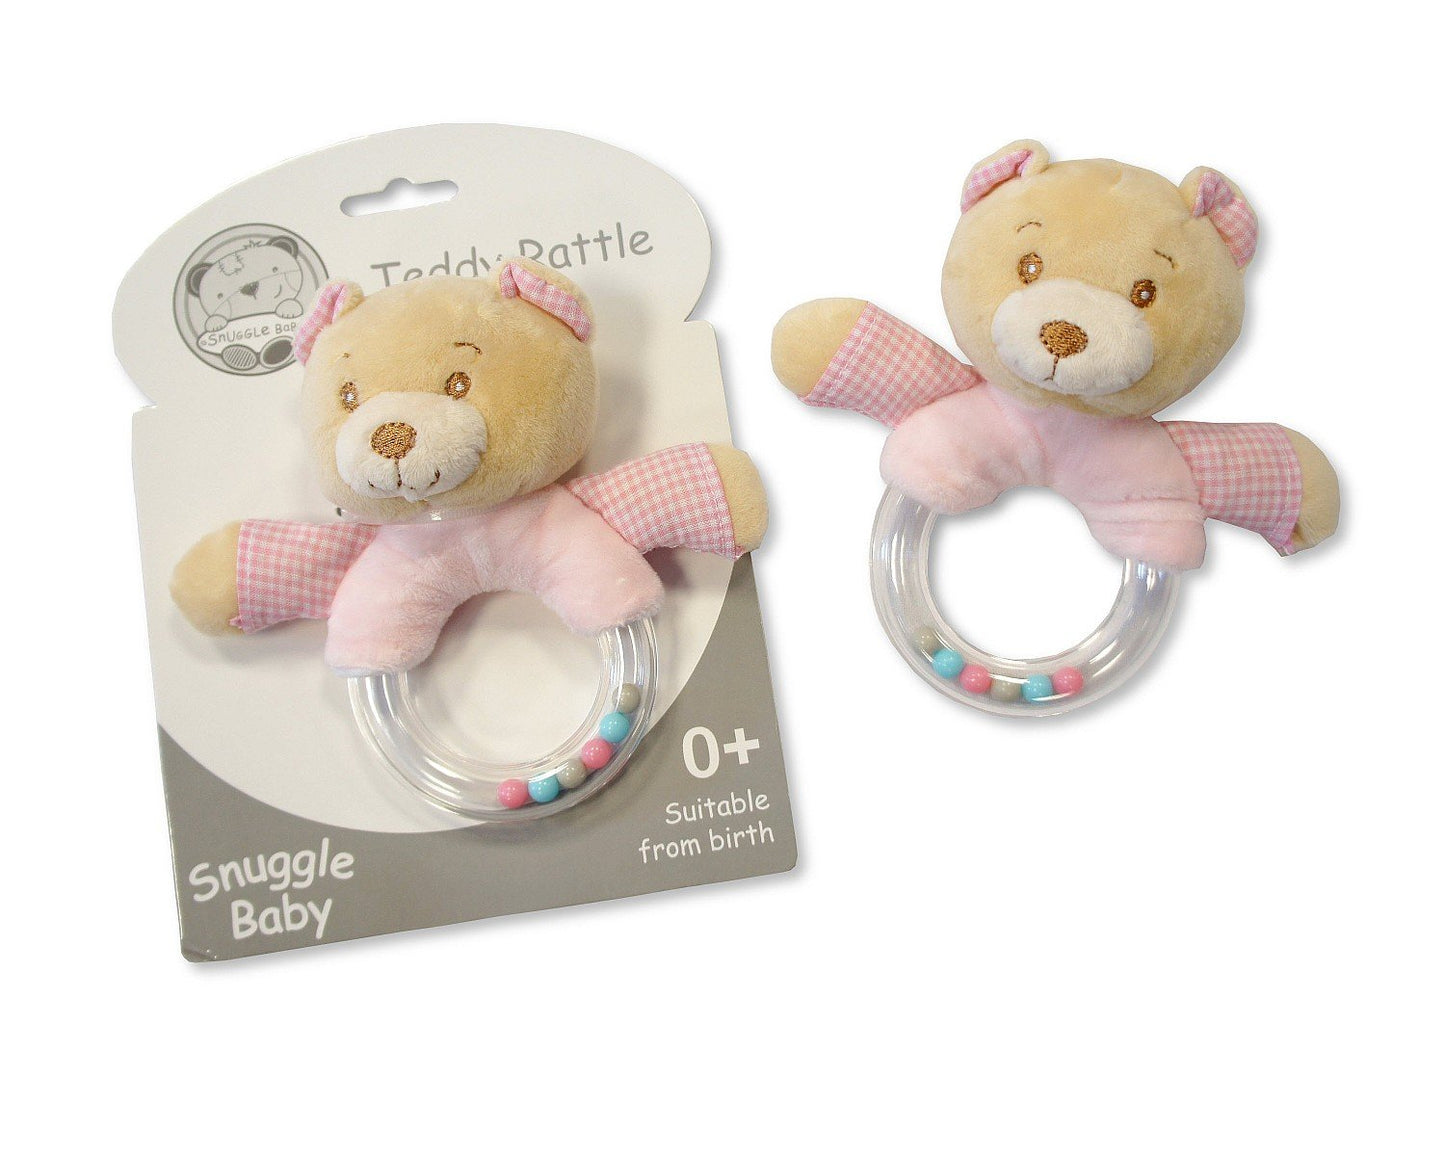 Baby Rattle Soft Toy Gift - hanrattycraftsgifts.co.uk